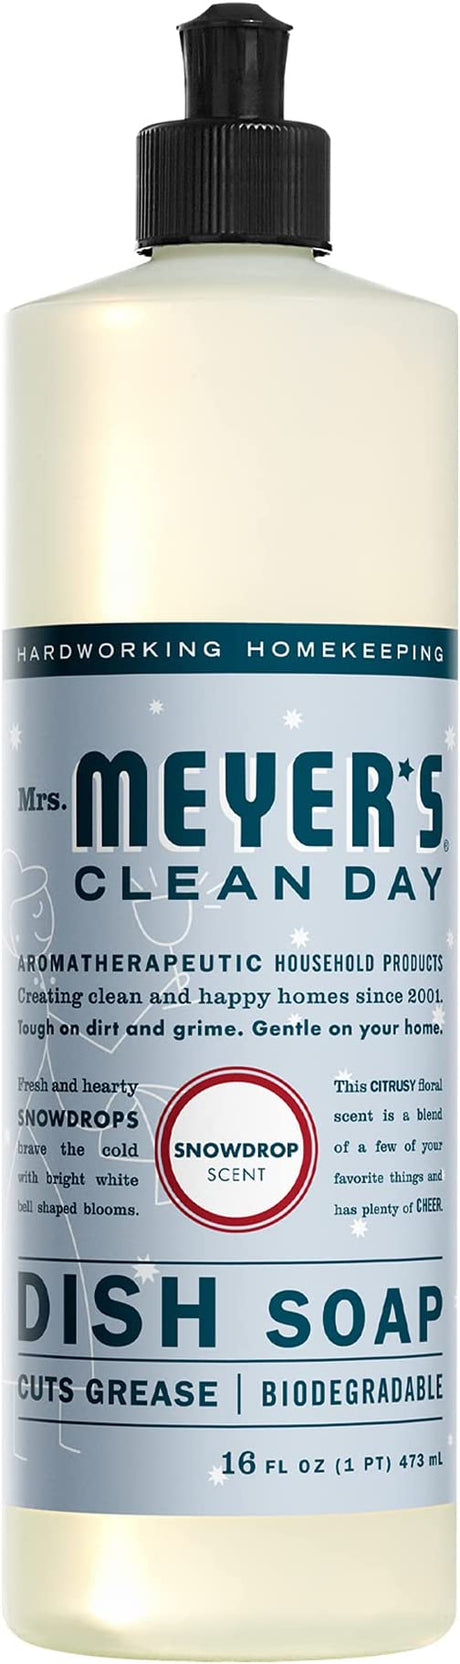 Mrs. Meyer's Clean Day Liquid Dish Soap, Snow Drop Fragrance, Pack of 6 - 16 Fl Oz Bottles Per Pack - Cozy Farm 